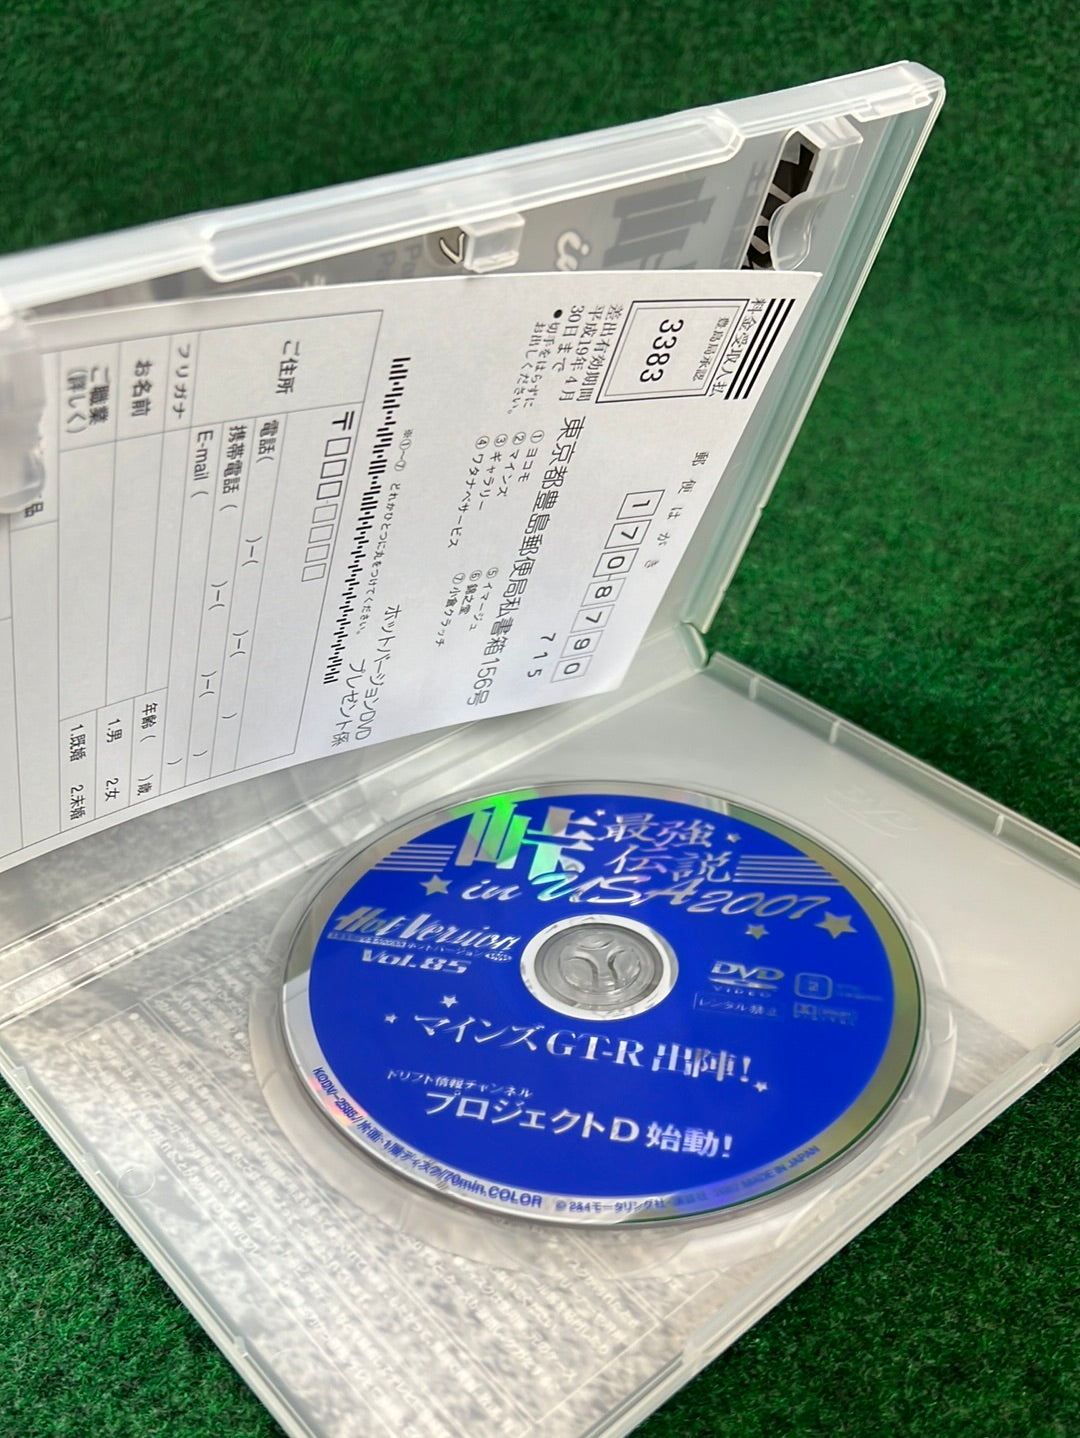 Hot Version DVD - Vol. 85